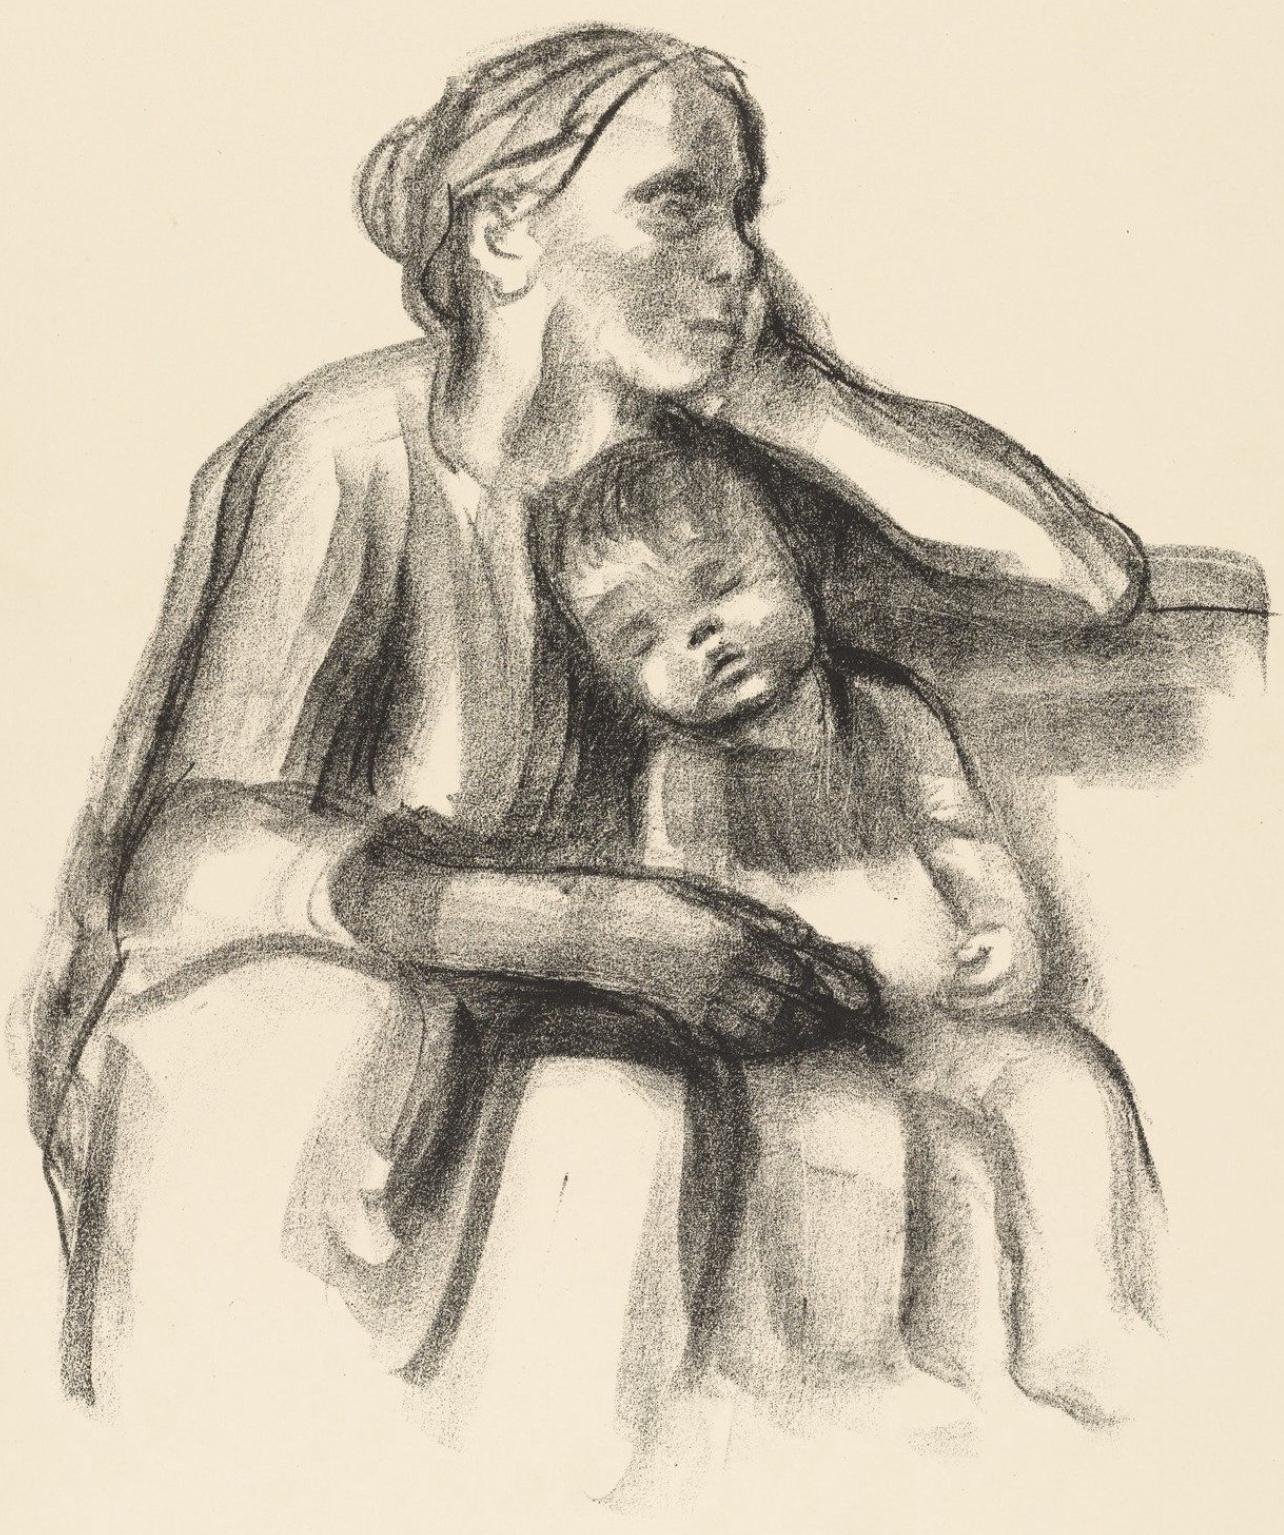 Kollwitz, Working-Class Woman with Sleeping Child  (after)